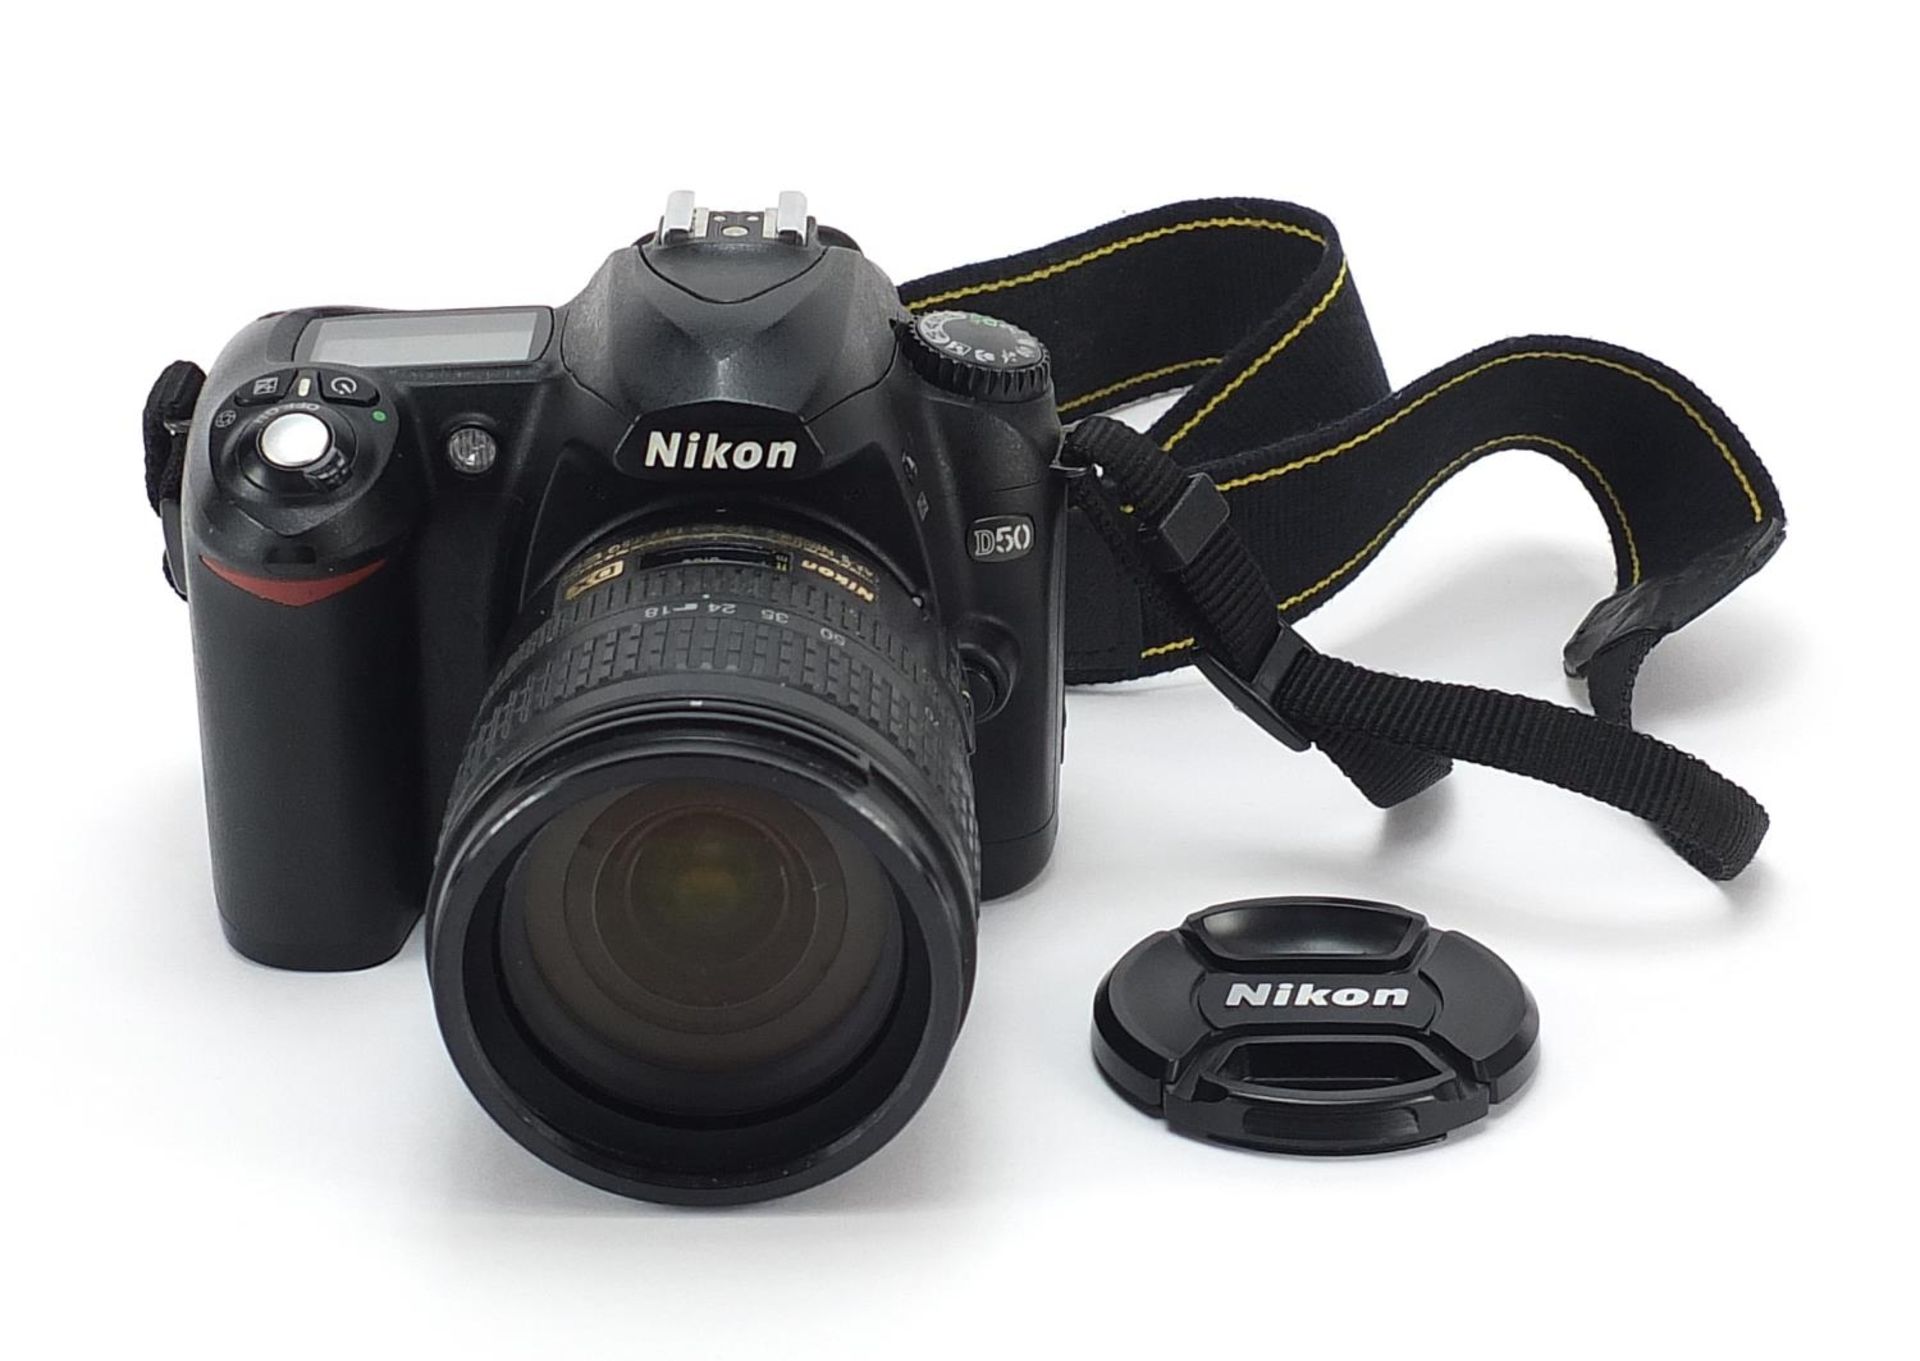 Nikon D50 DSL camera - Image 2 of 6